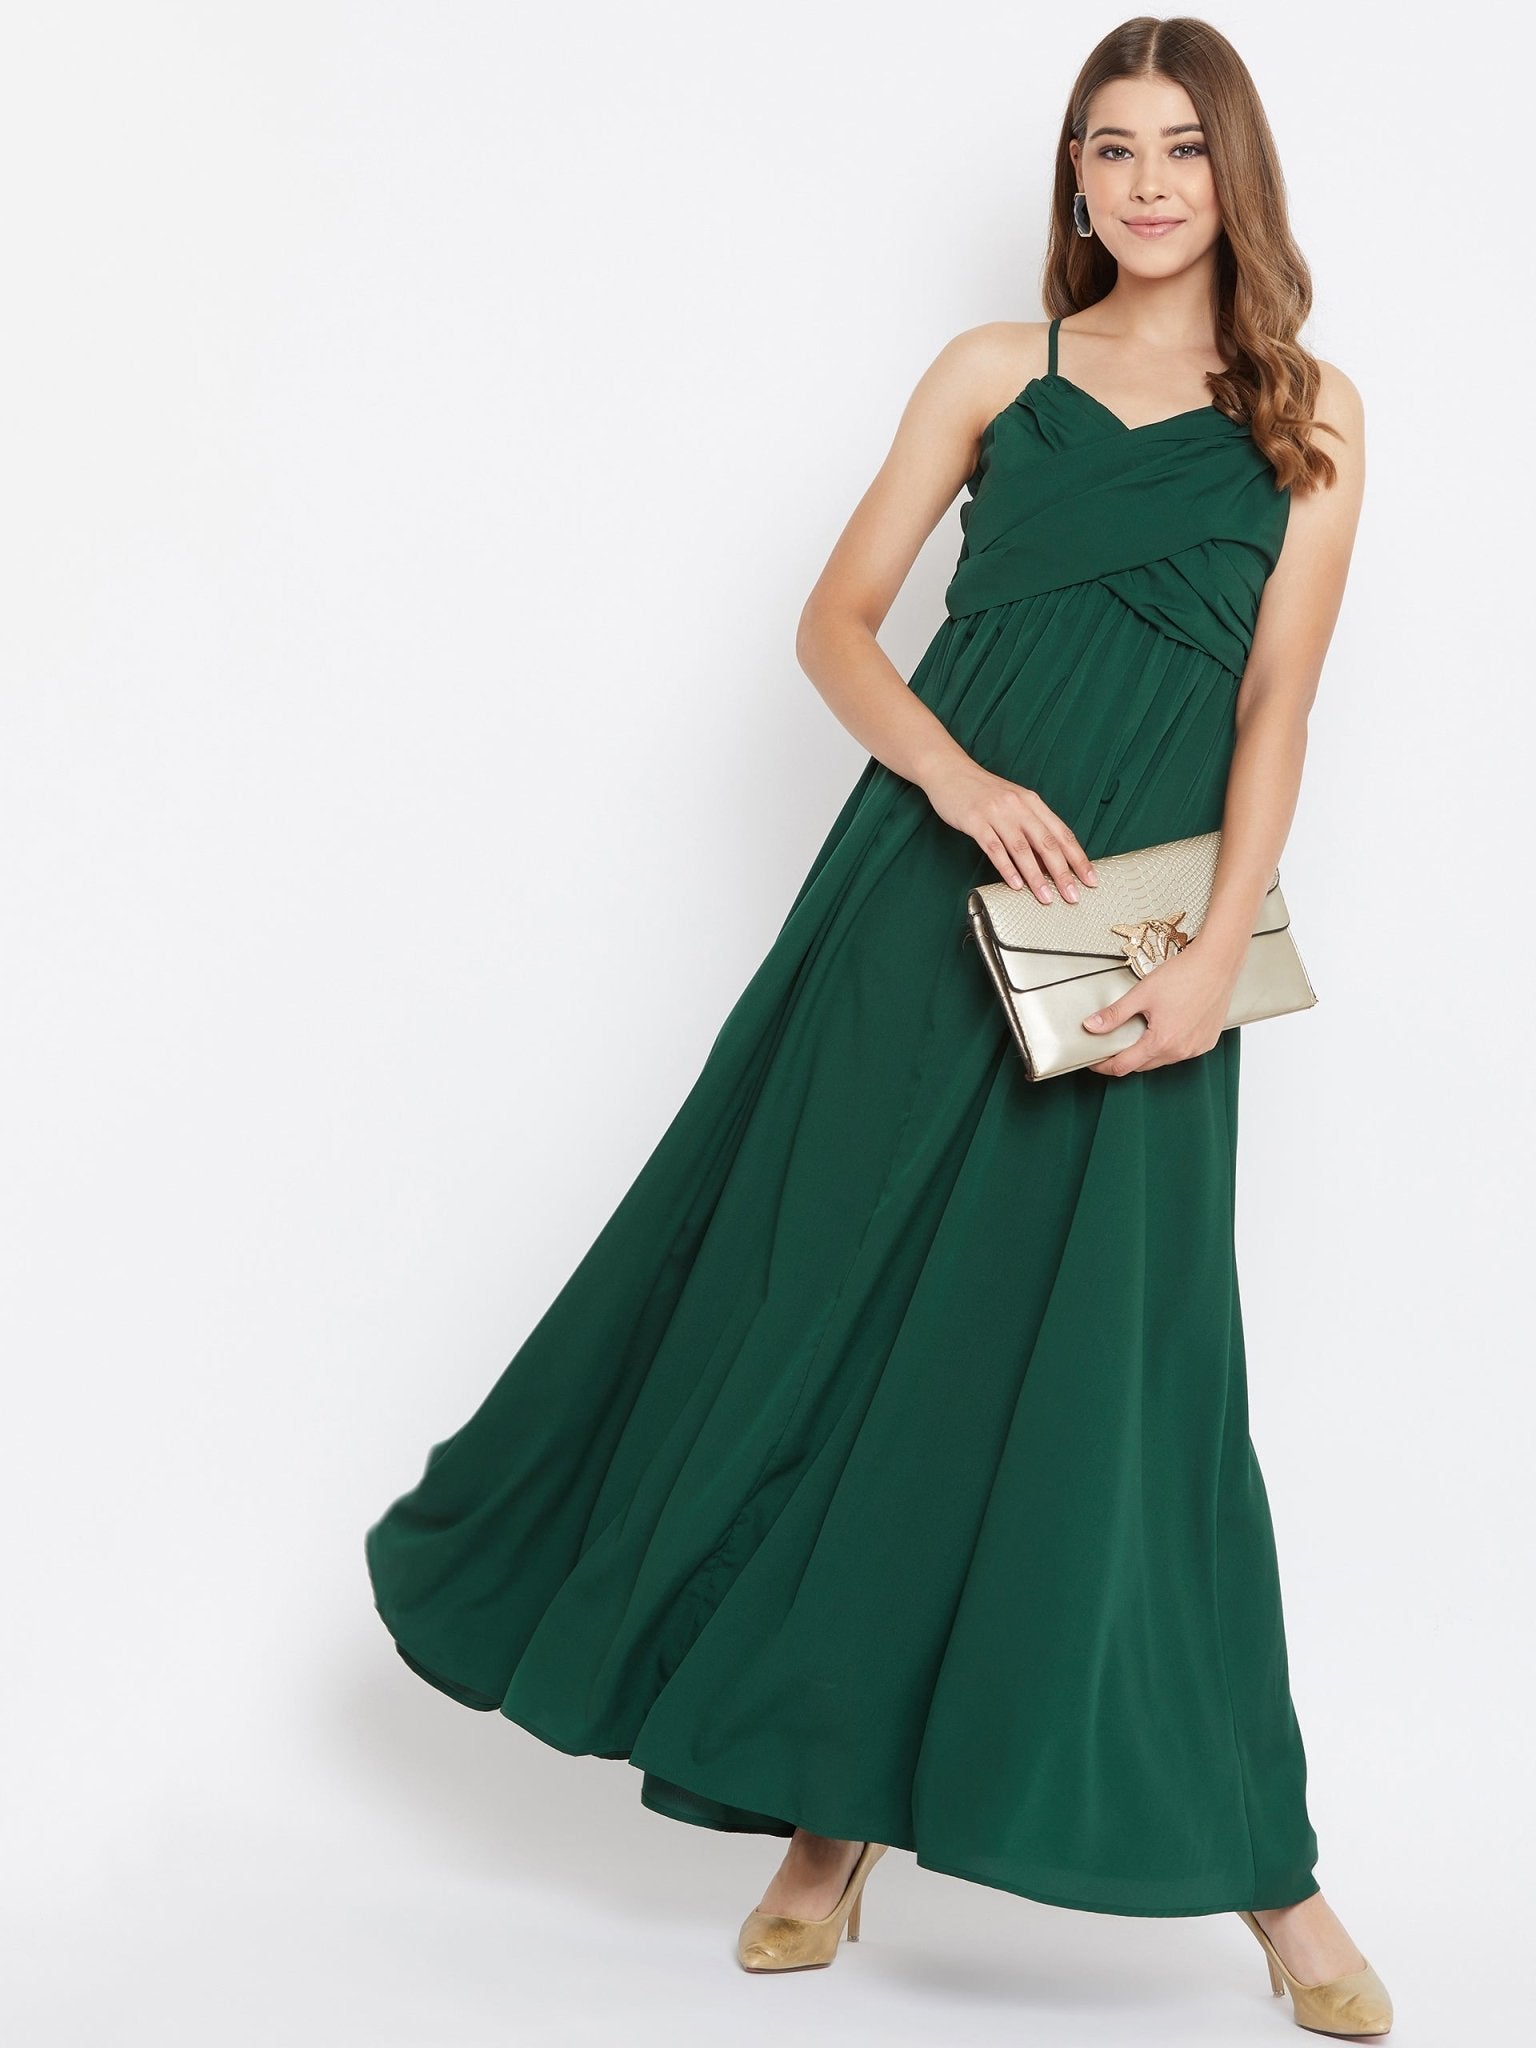 Folk Republic Women Solid Green V-Neck Sleeveless Ruched Maxi Dress - #folk republic#